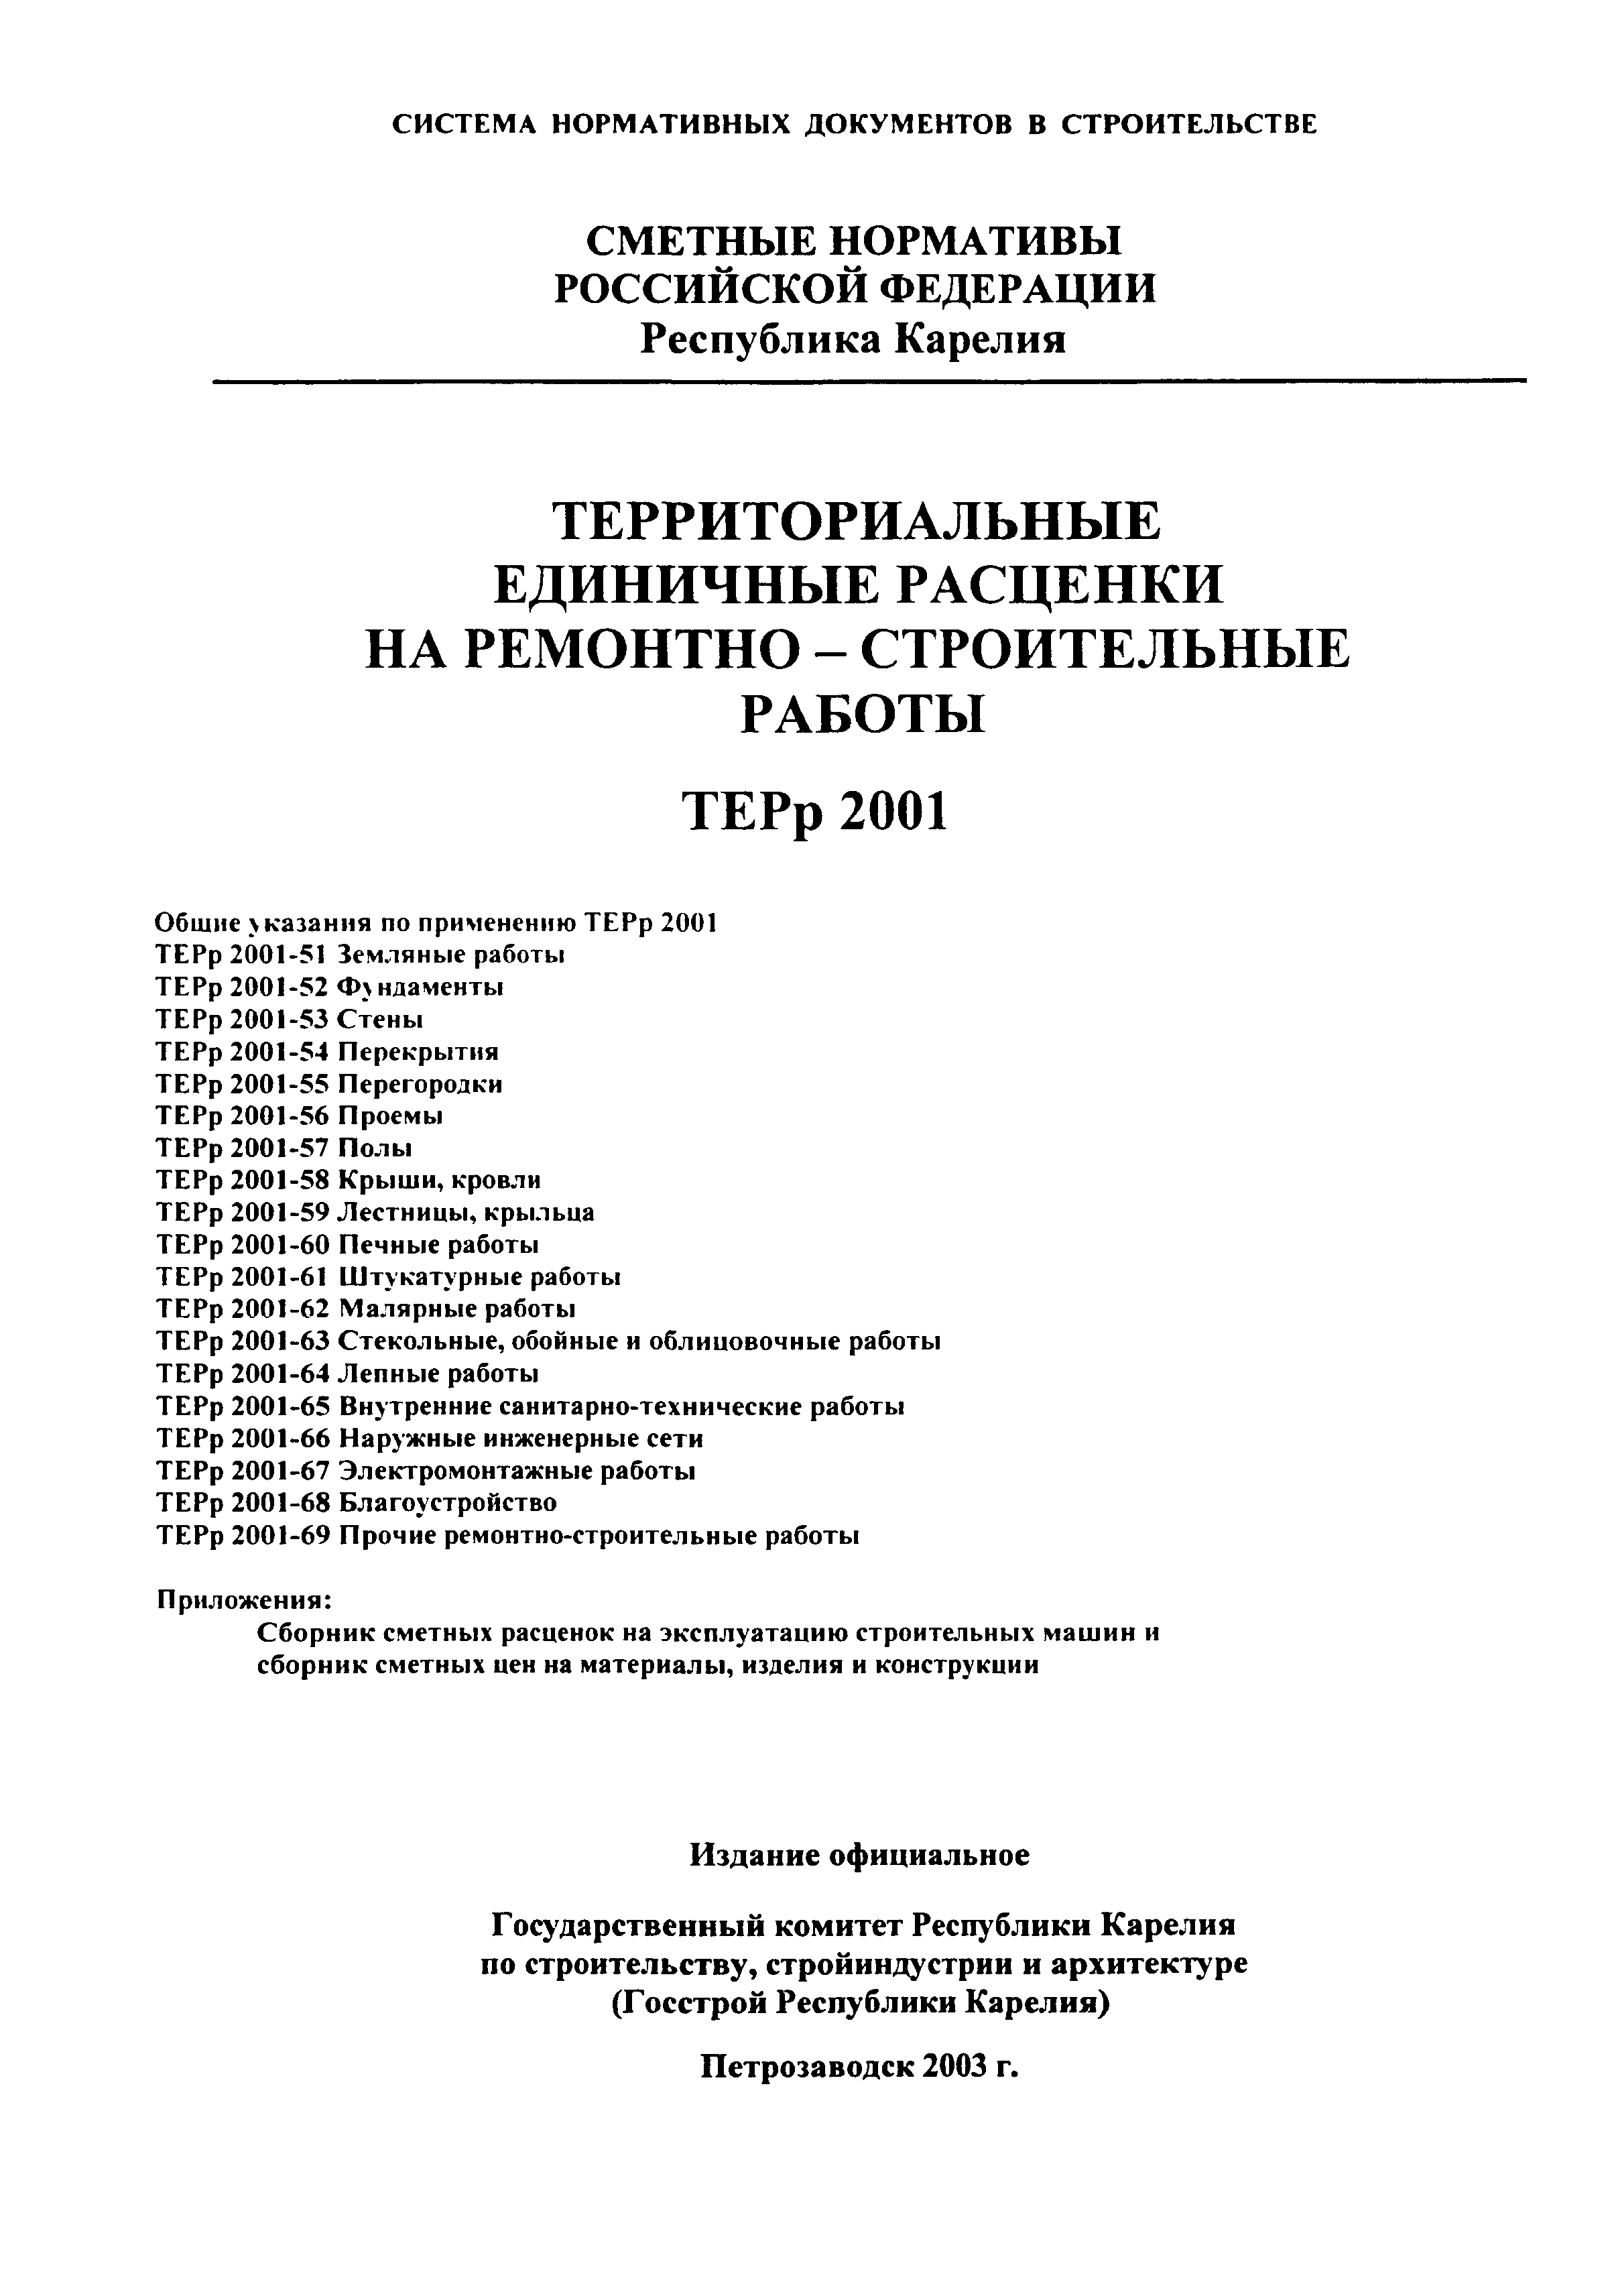 ТЕРр Республика Карелия 2001-65